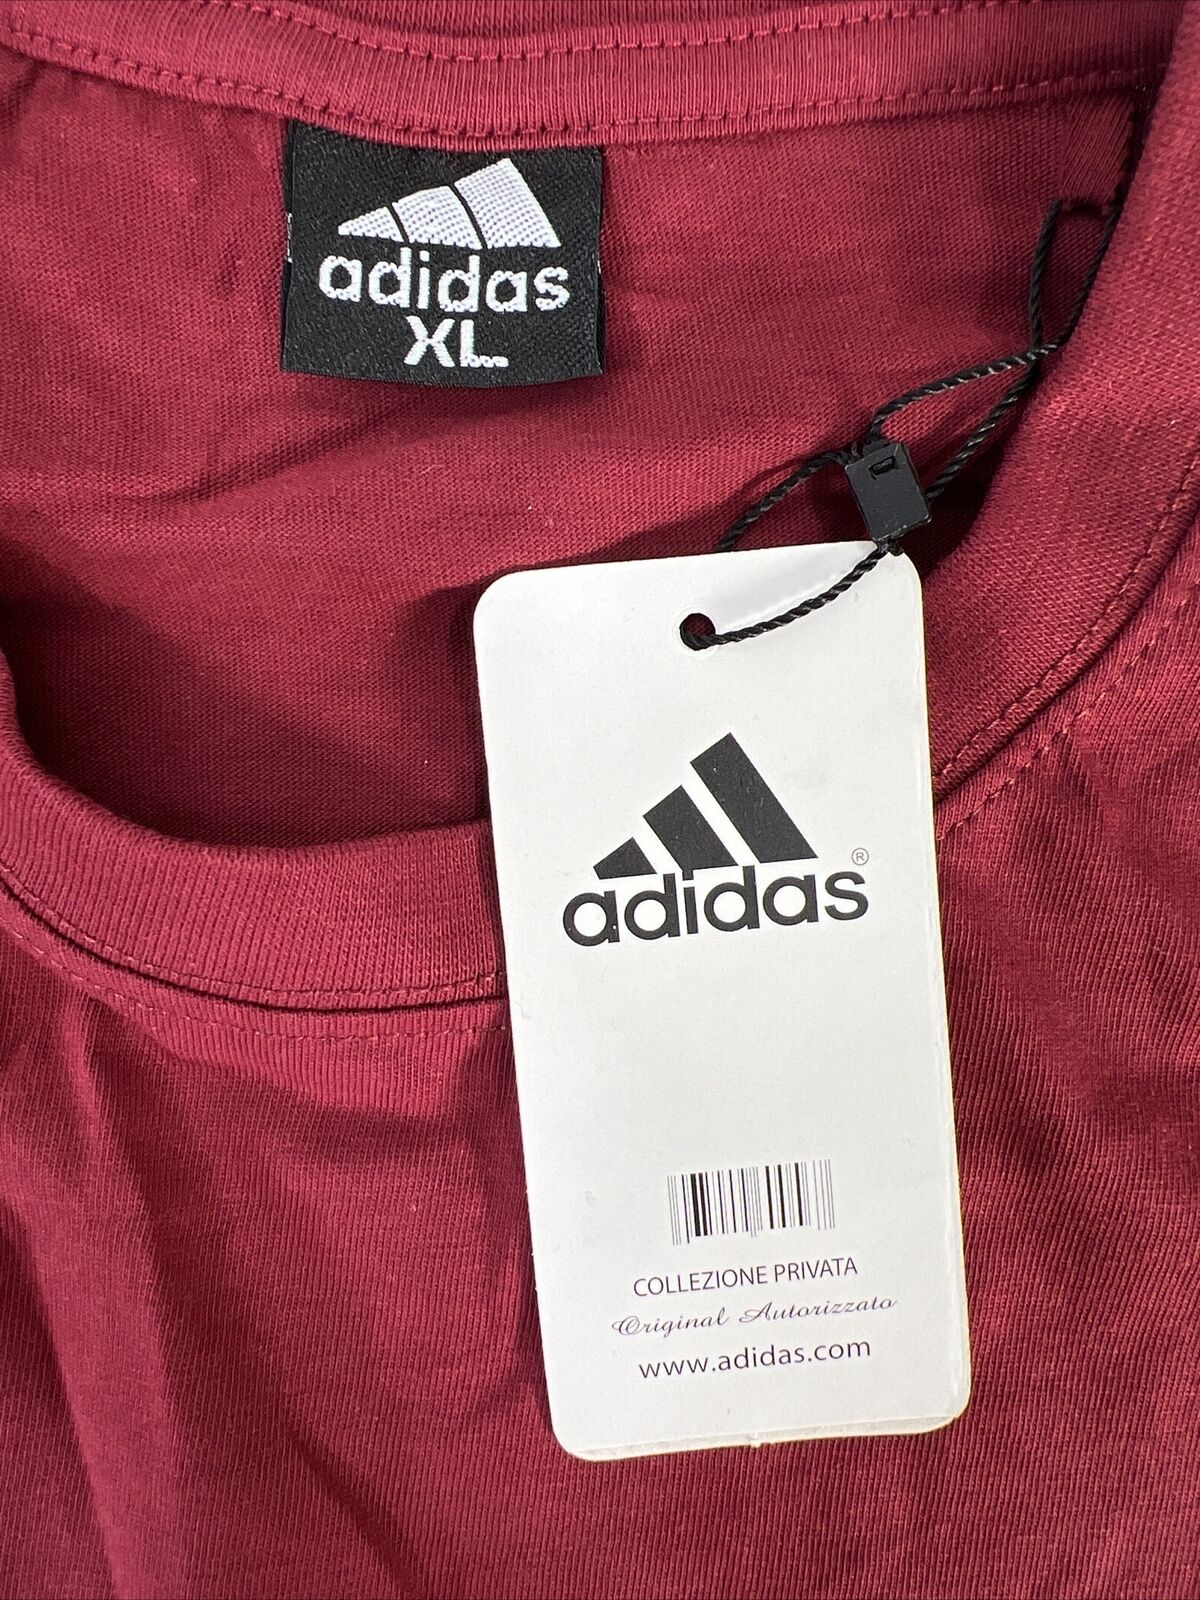 NEW adidas Women's Red/Silver Kick Boxing Short Sleeve T-Shirt - XL